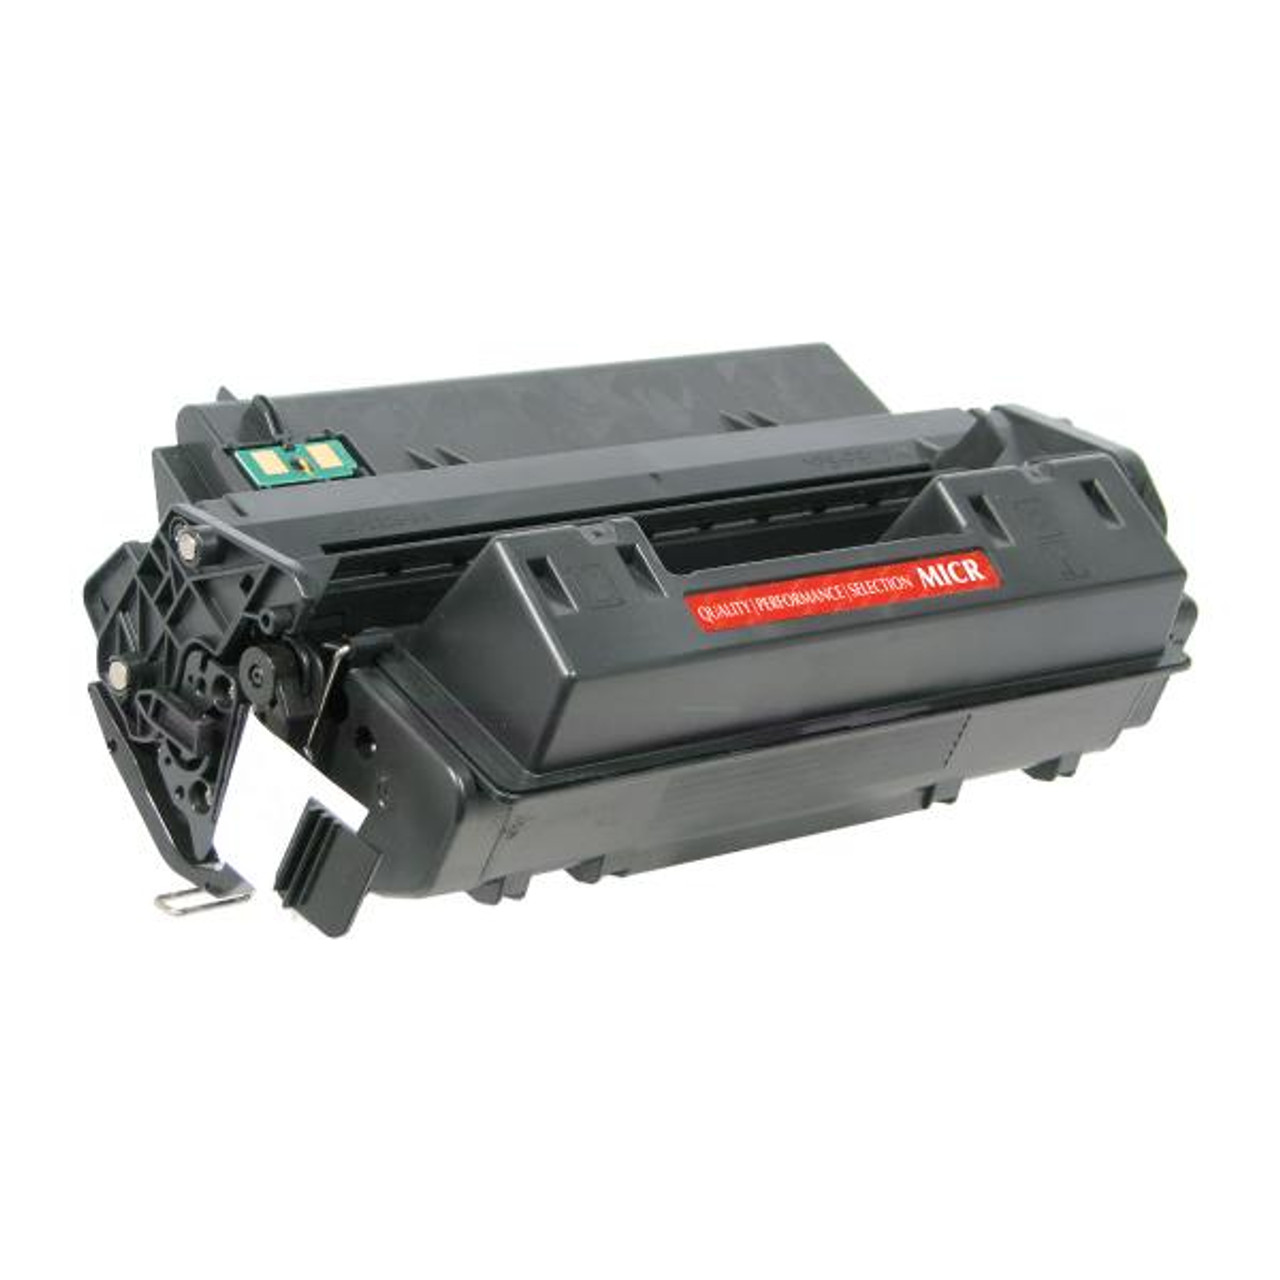 MICR Toner Cartridge for HP Q2610A, TROY 02-81127-001-1